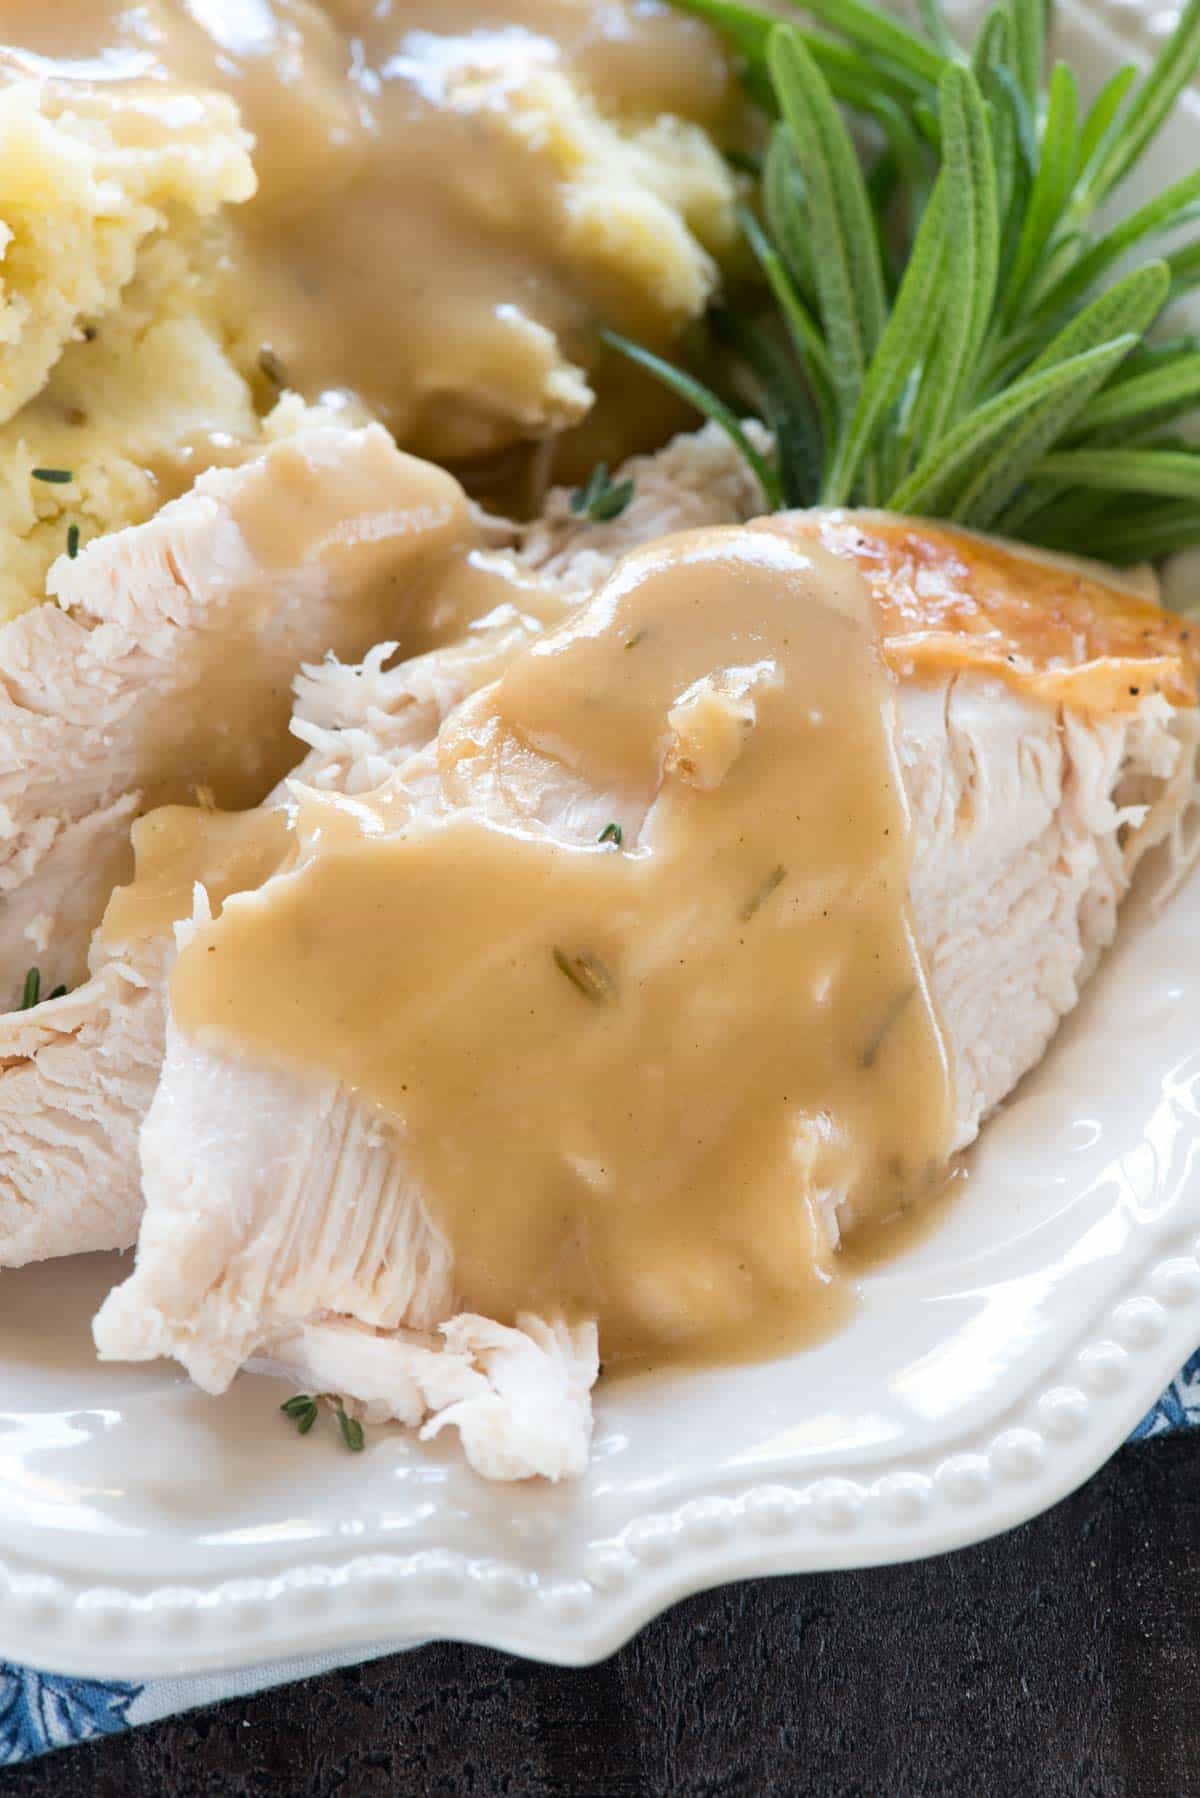 Turkey with gravy on a white platter